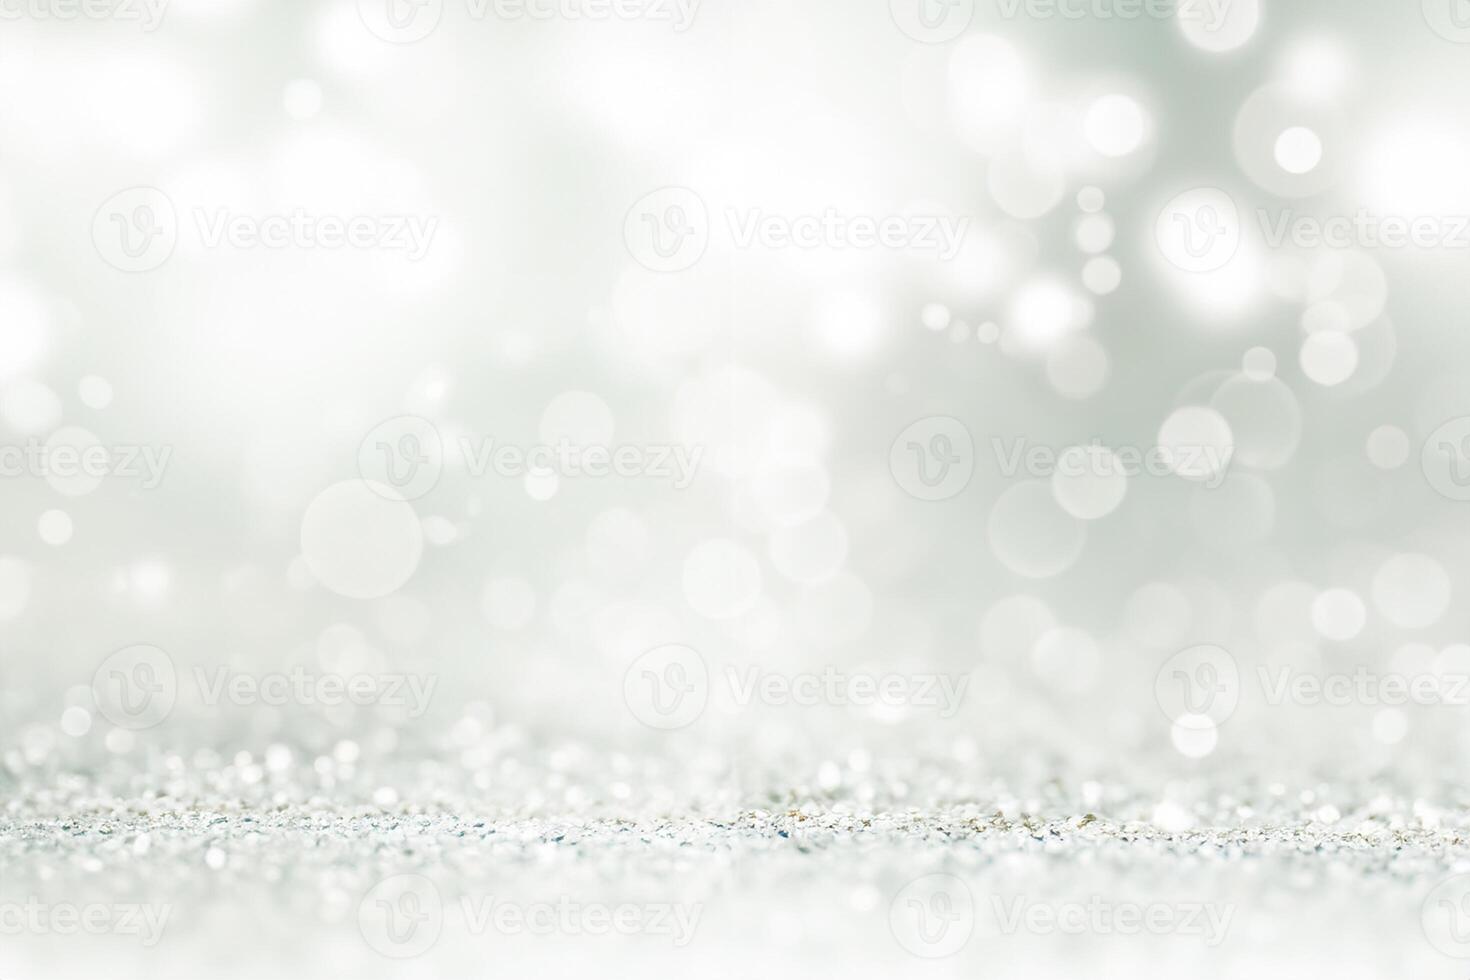 silver- textur jul abstrakt bakgrund foto